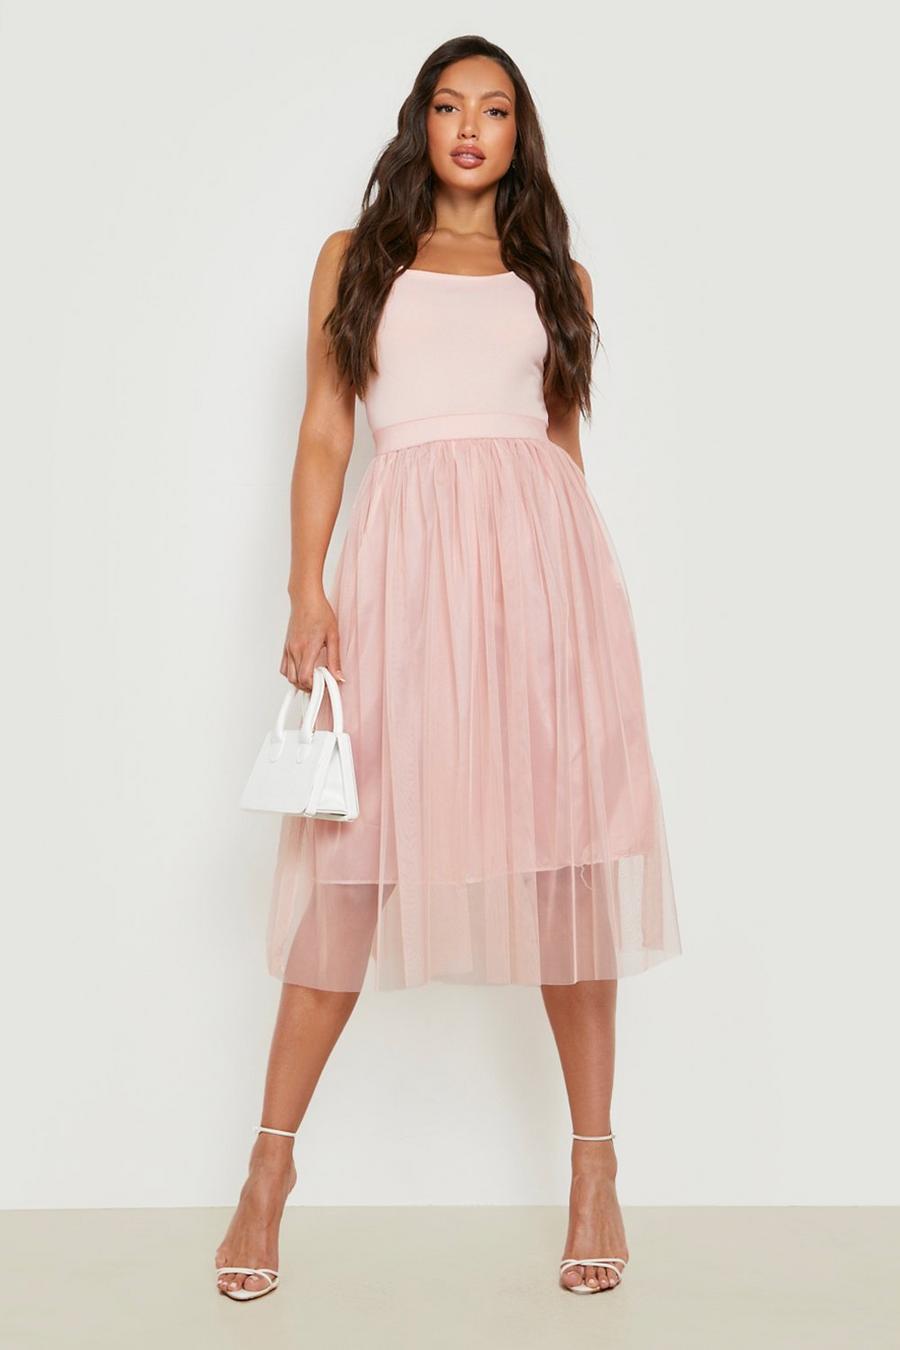 Blush pink Tall Boutique Tulle Mesh Midi Dress